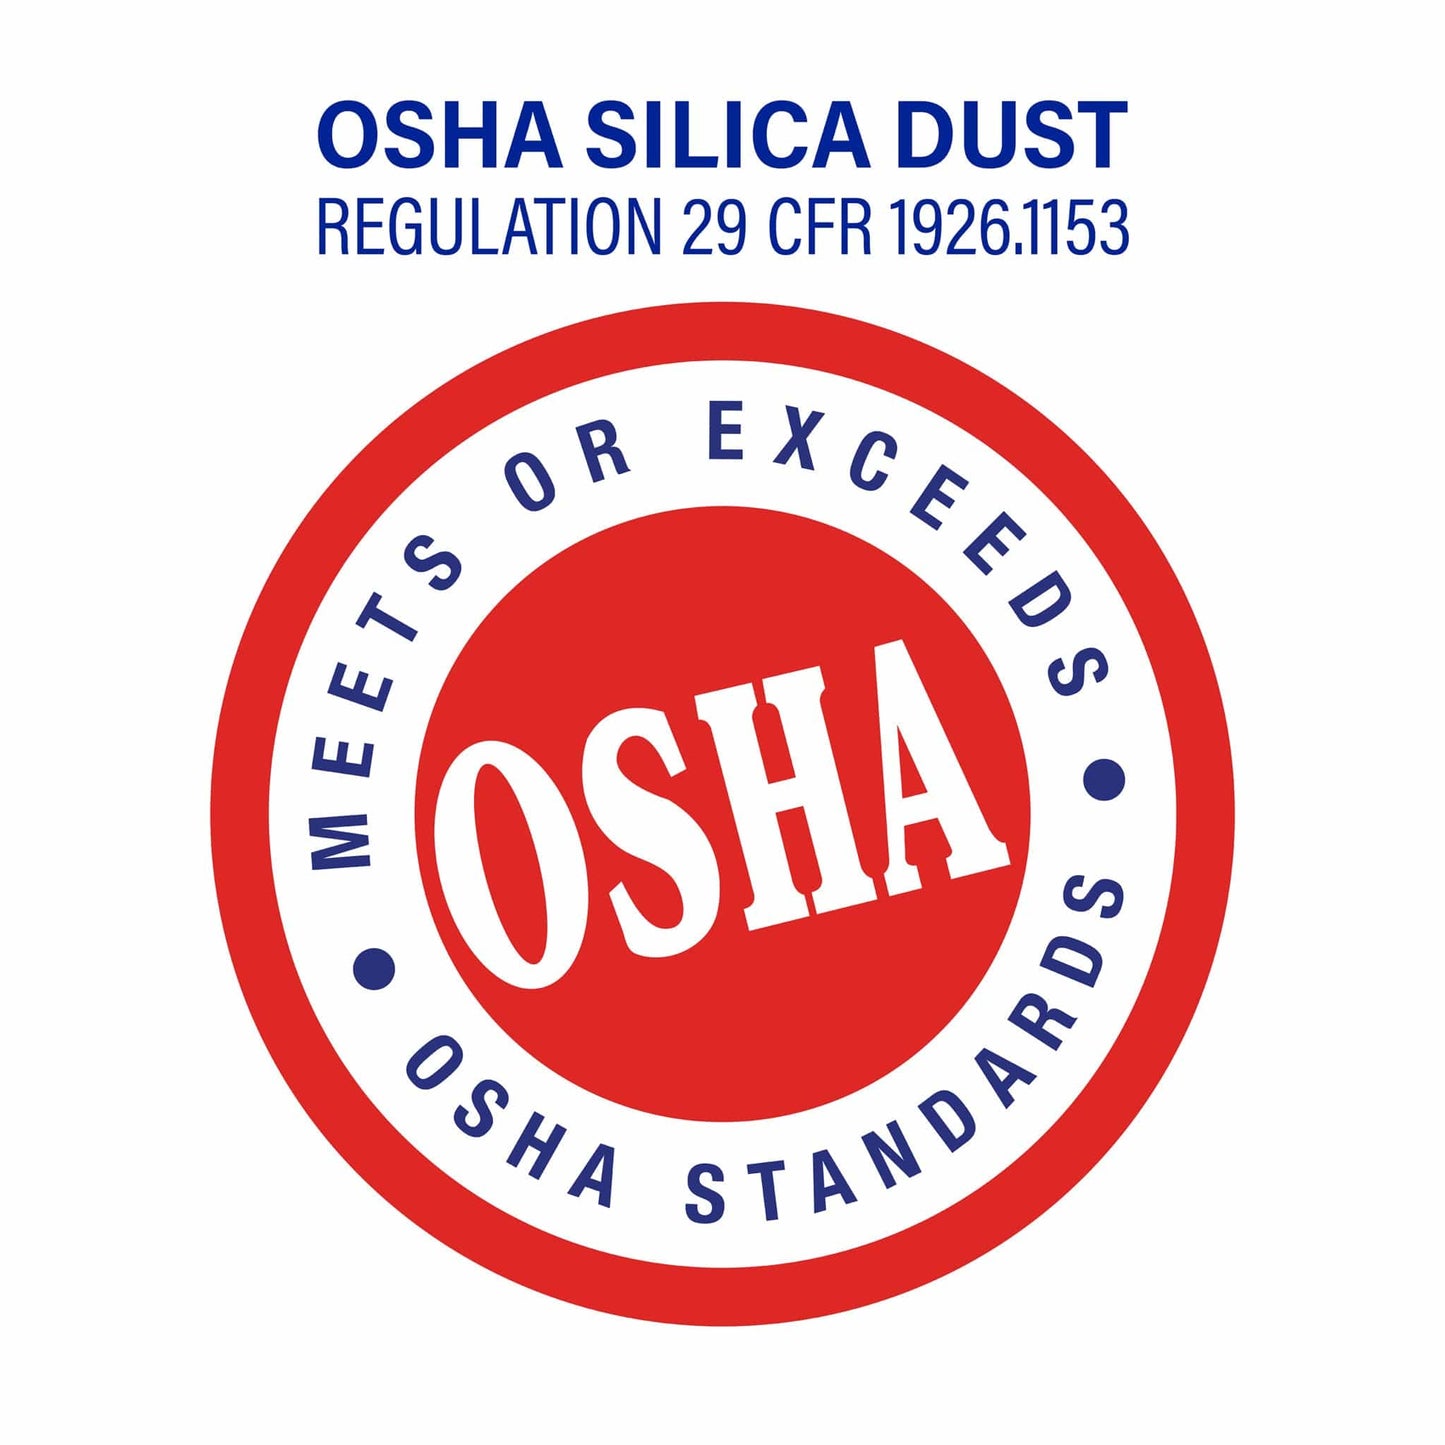 Meets or Exceeds OSHA Silica Dust Regulation 29 CFR 1926.1159